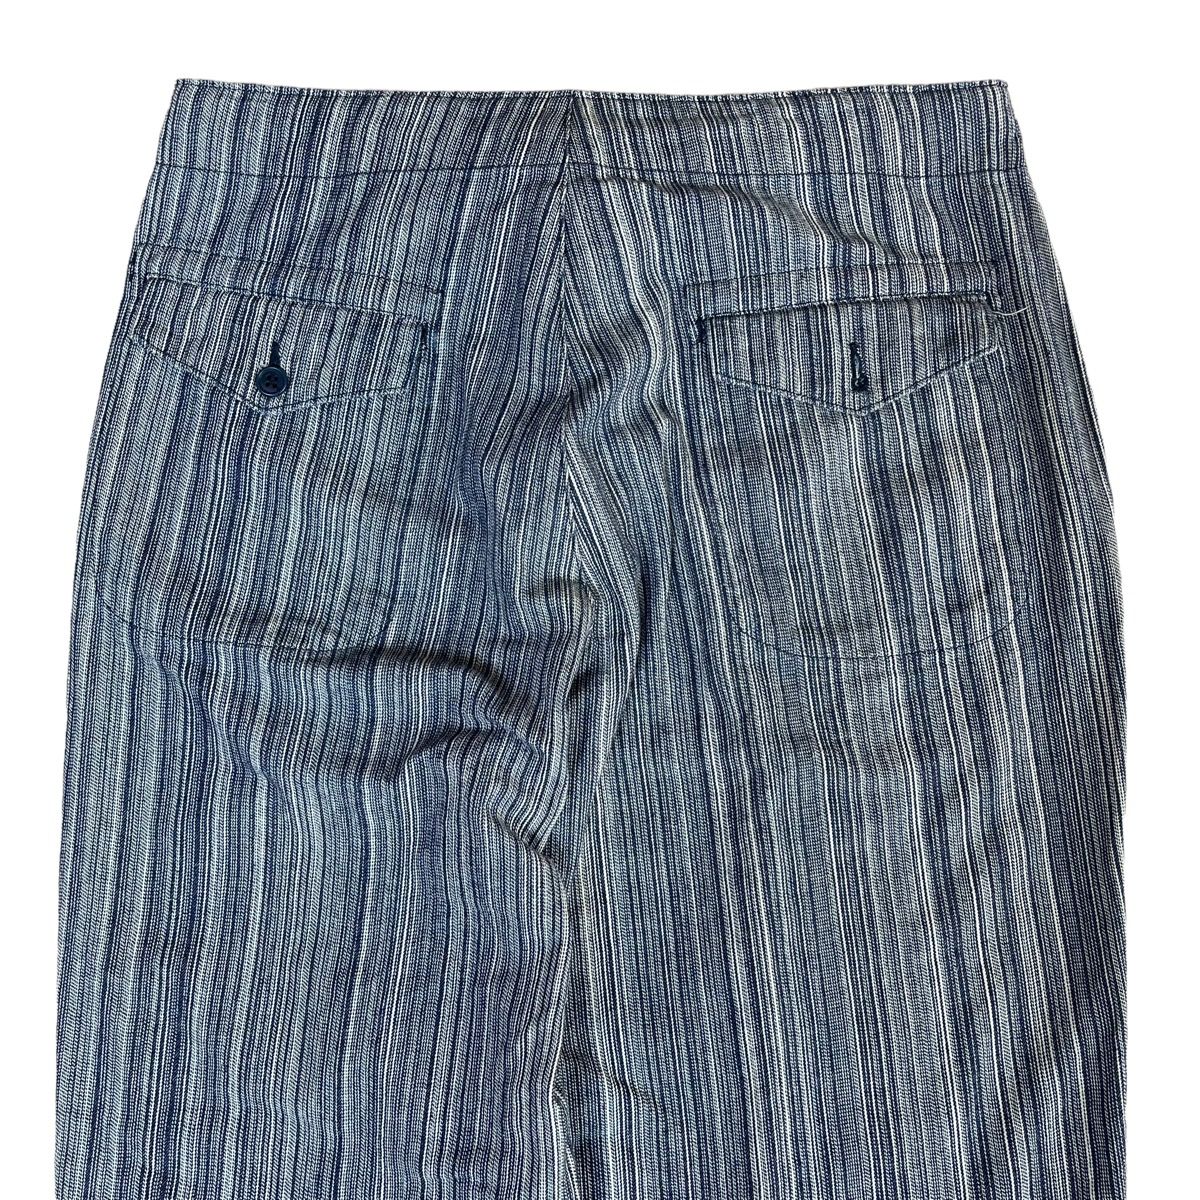 Beams Japan Inspired Kapital Style Pants Size 31 - 8